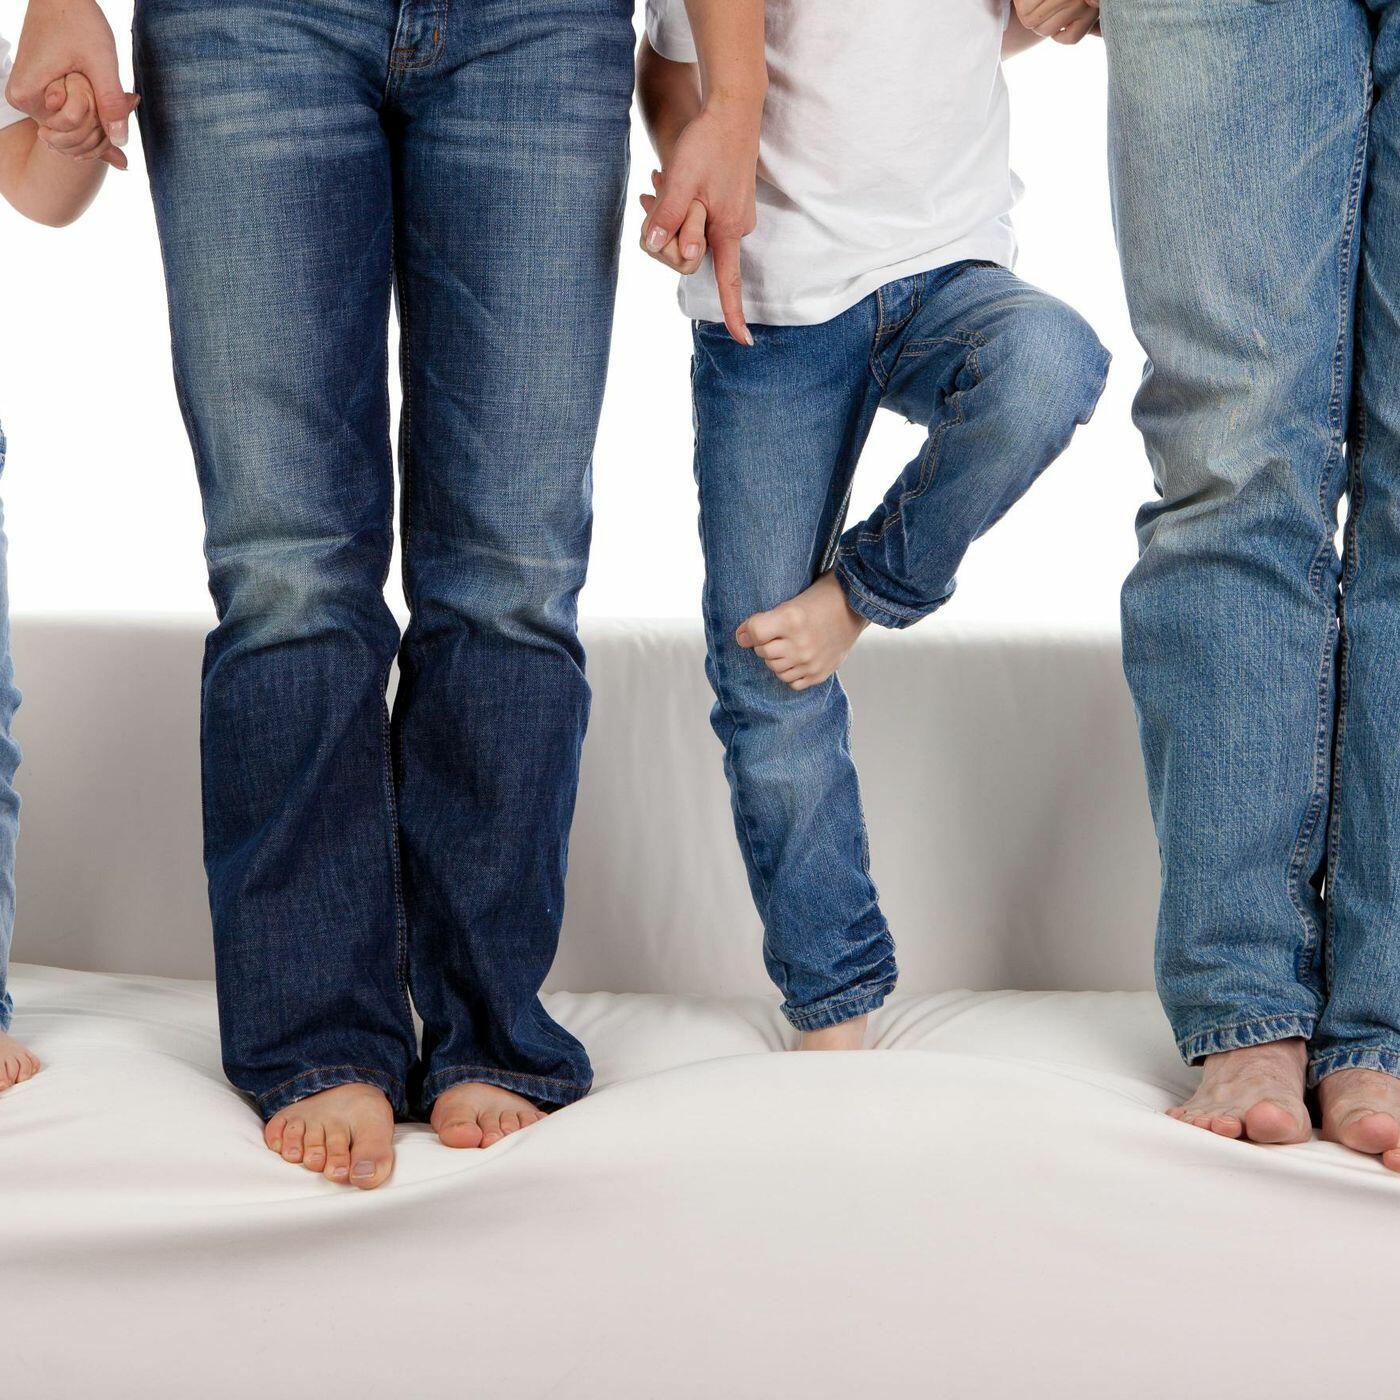 He is wearing jeans. Семья в джинсах. Семейная фотосессия в джинсах. Фотосессия семьи в джинсе. Фотосессия в джинсовом стиле семейная.